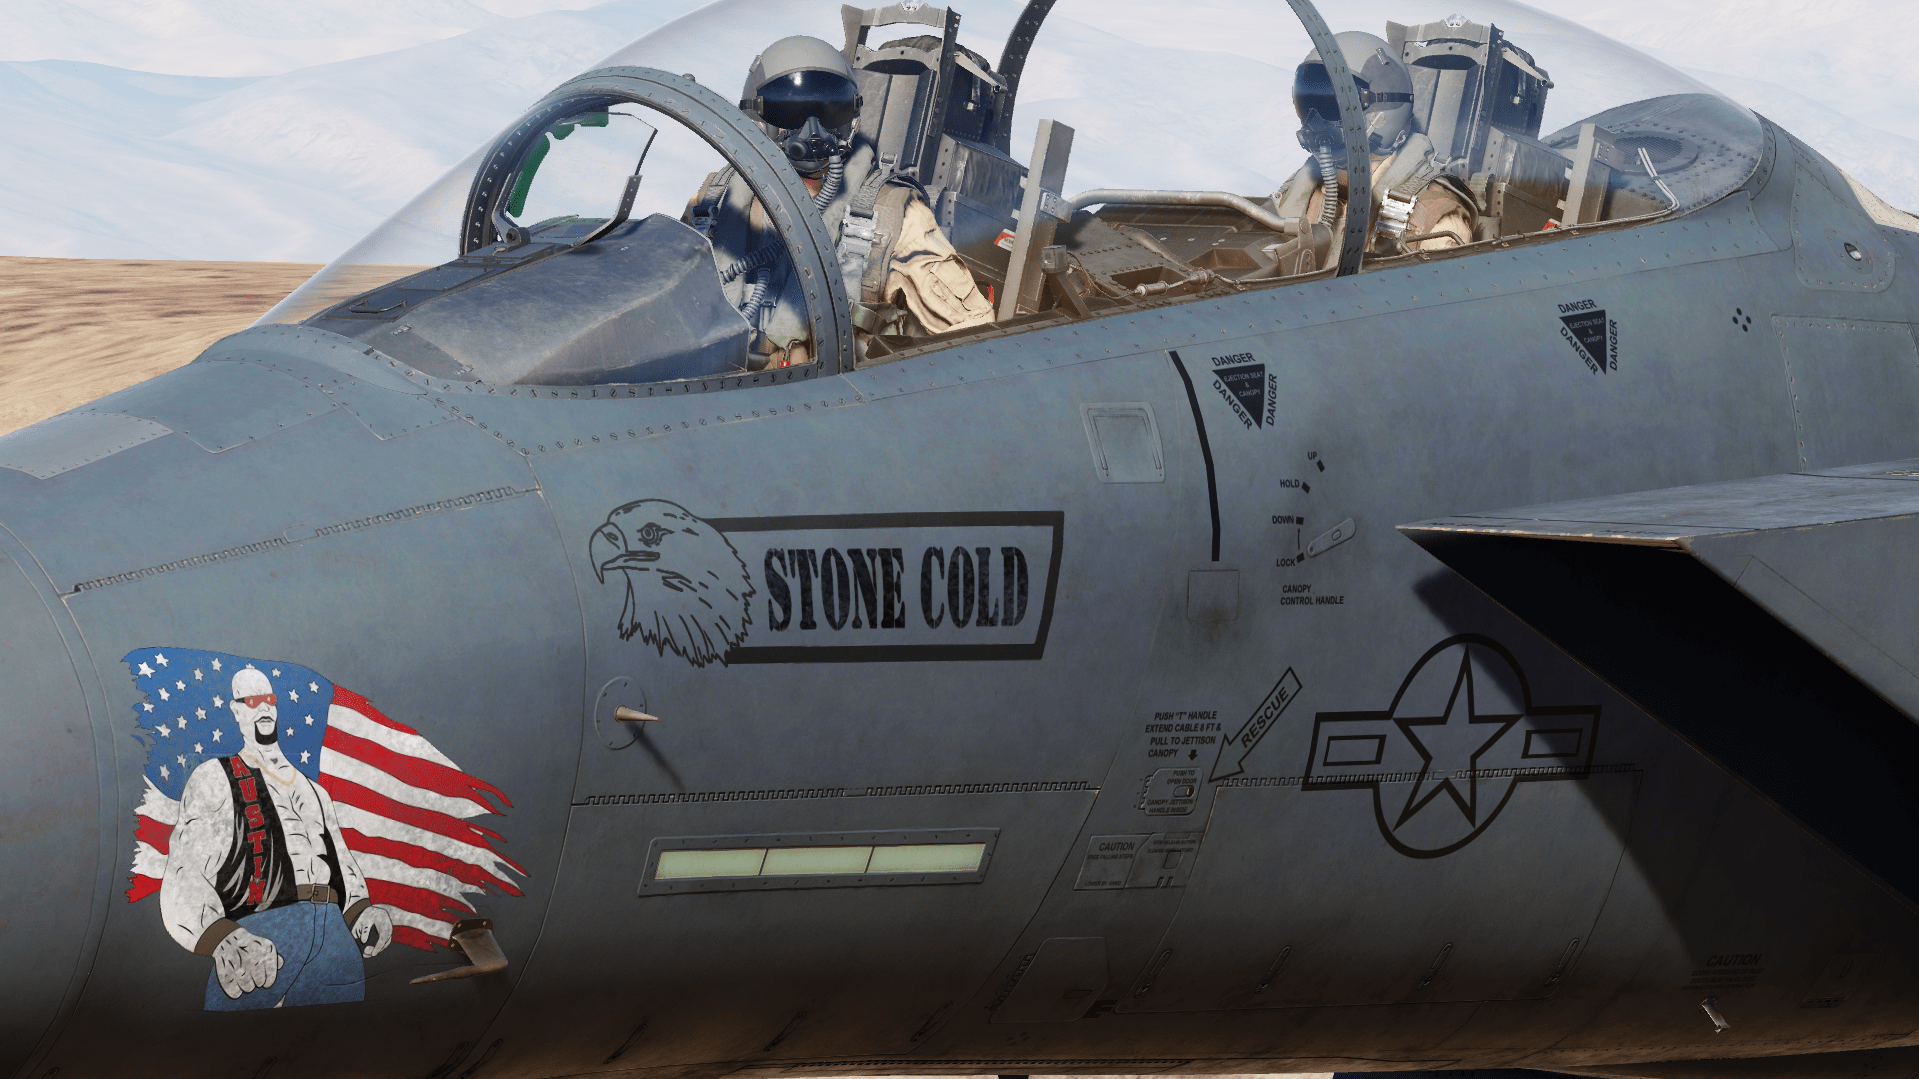 F-15E Strike eagle LN 00-3003 "Stone Cold"